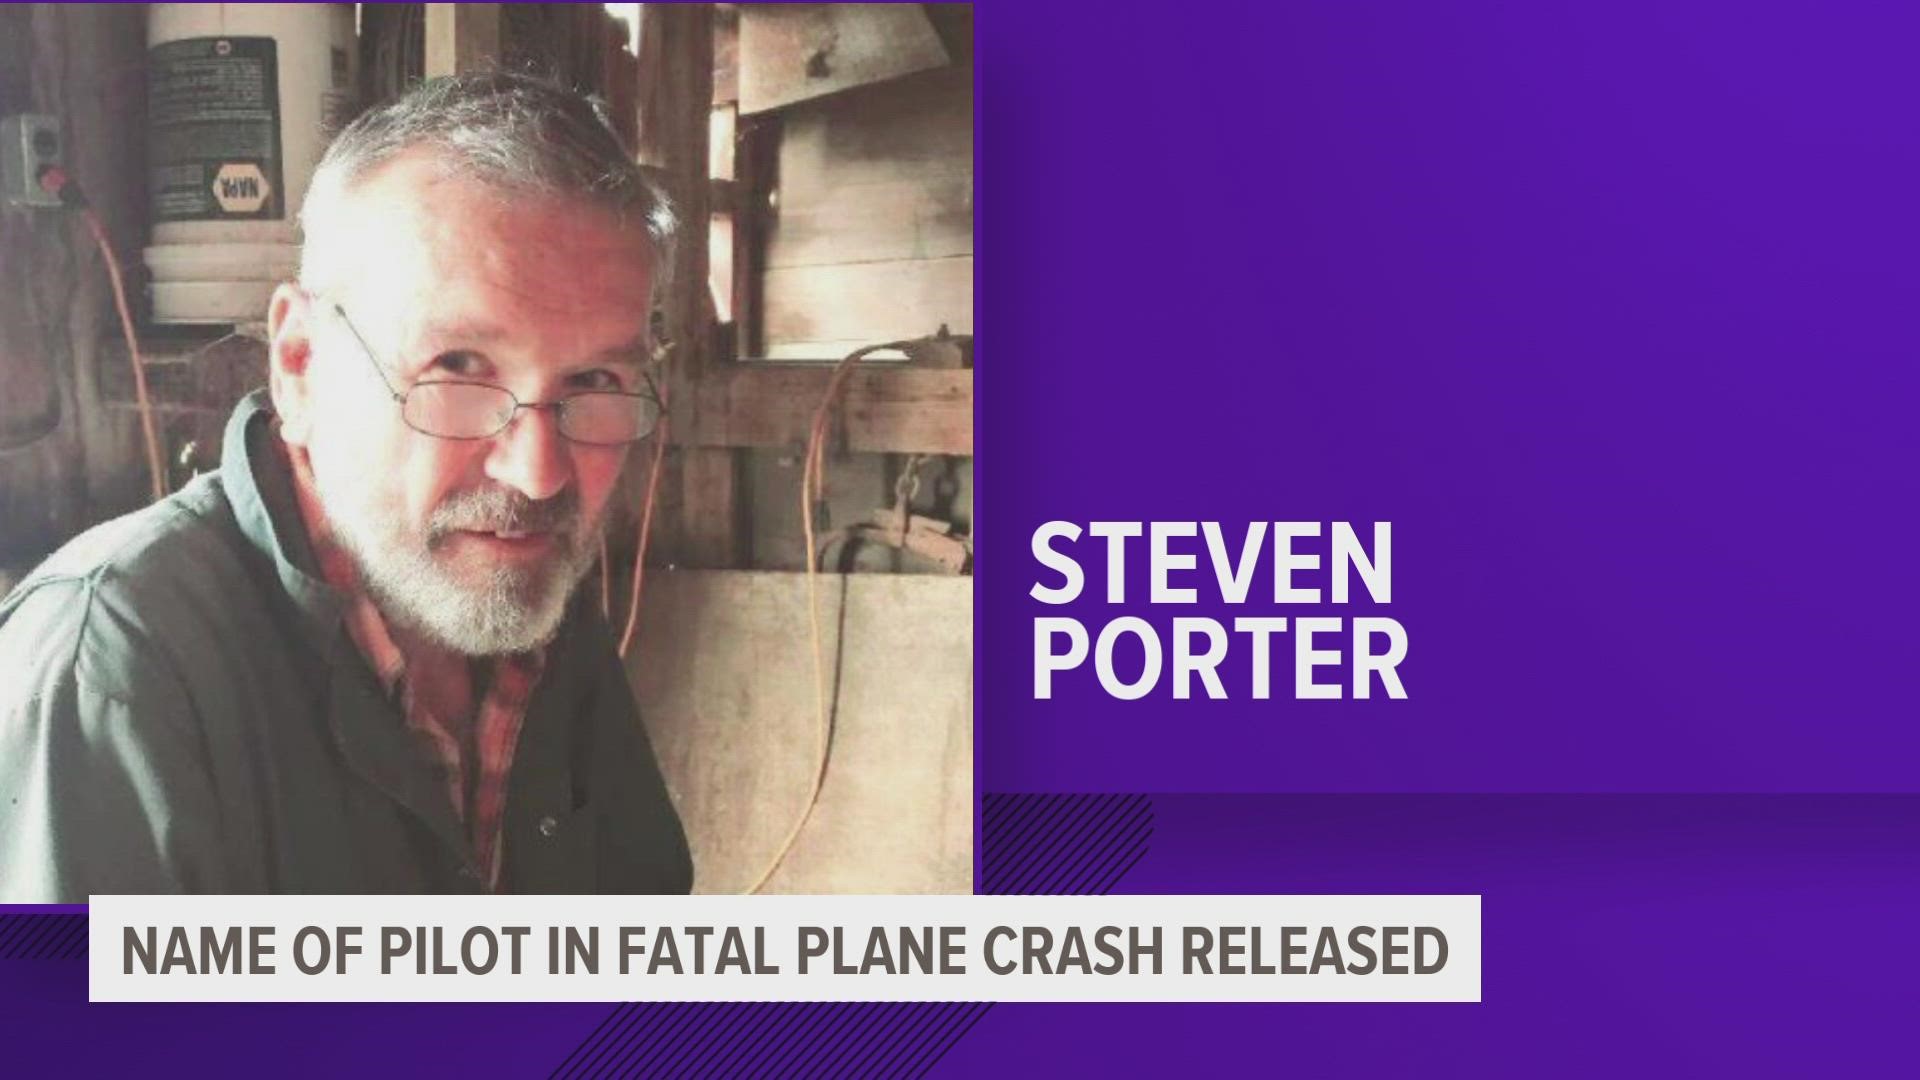 Steven Porter's plane hit a power line during take off around 12:40 p.m. Monday, Dec. 5, according to Iowa State Patrol.